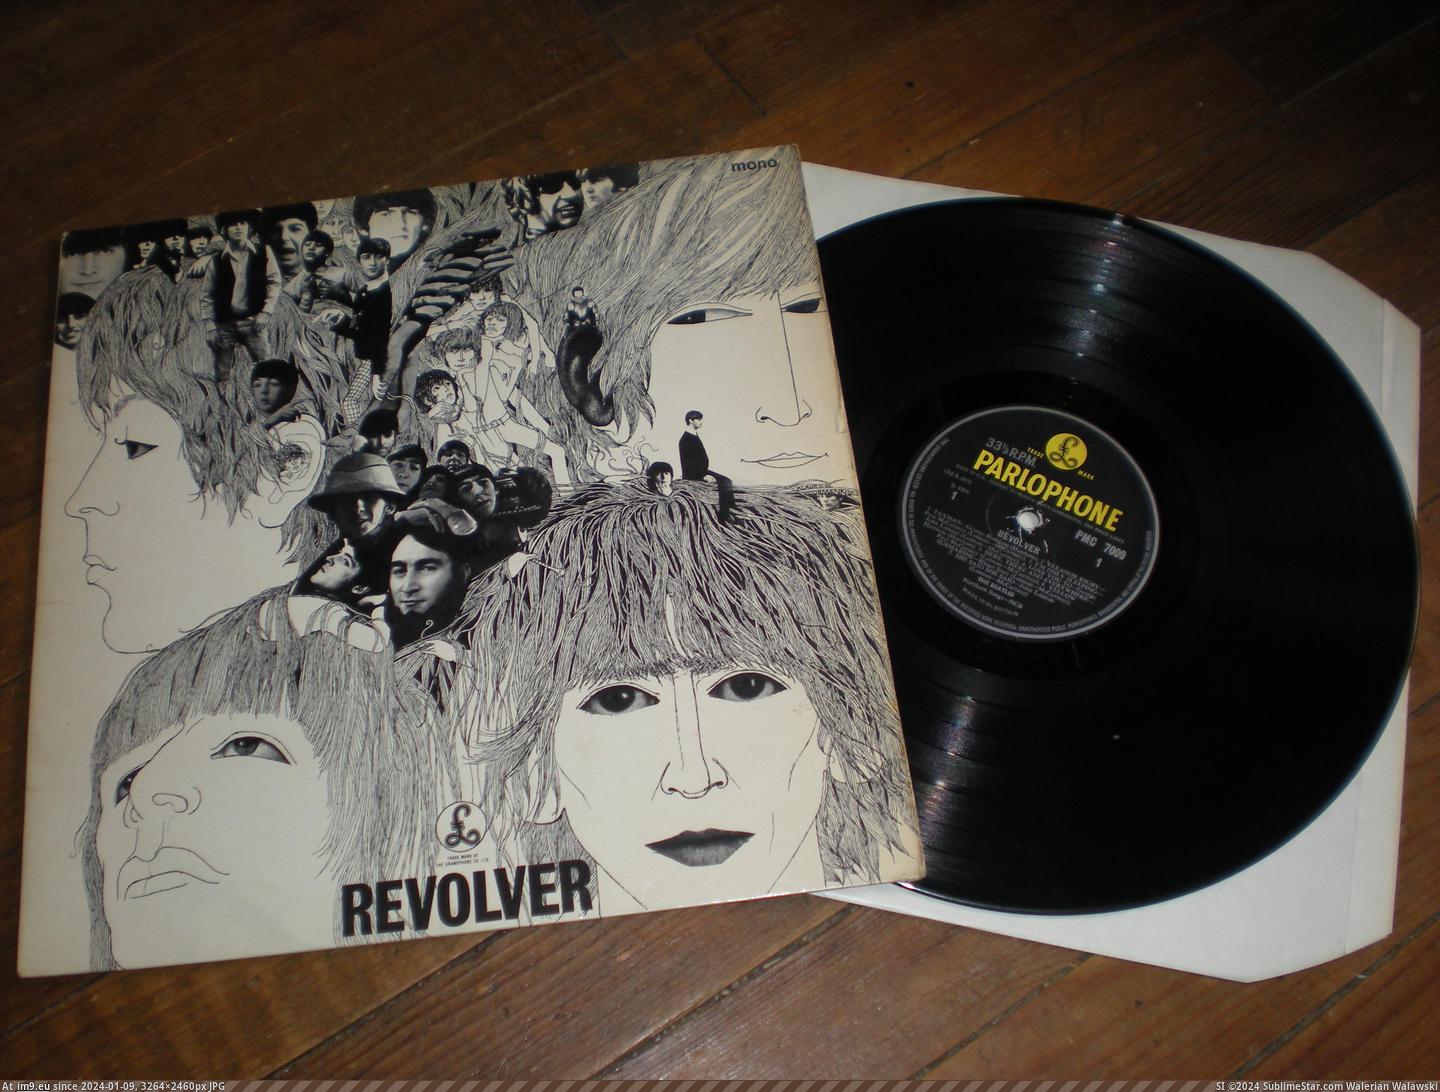  #Revolver  Revolver 15-07-14 2 Pic. (Изображение из альбом new 1))